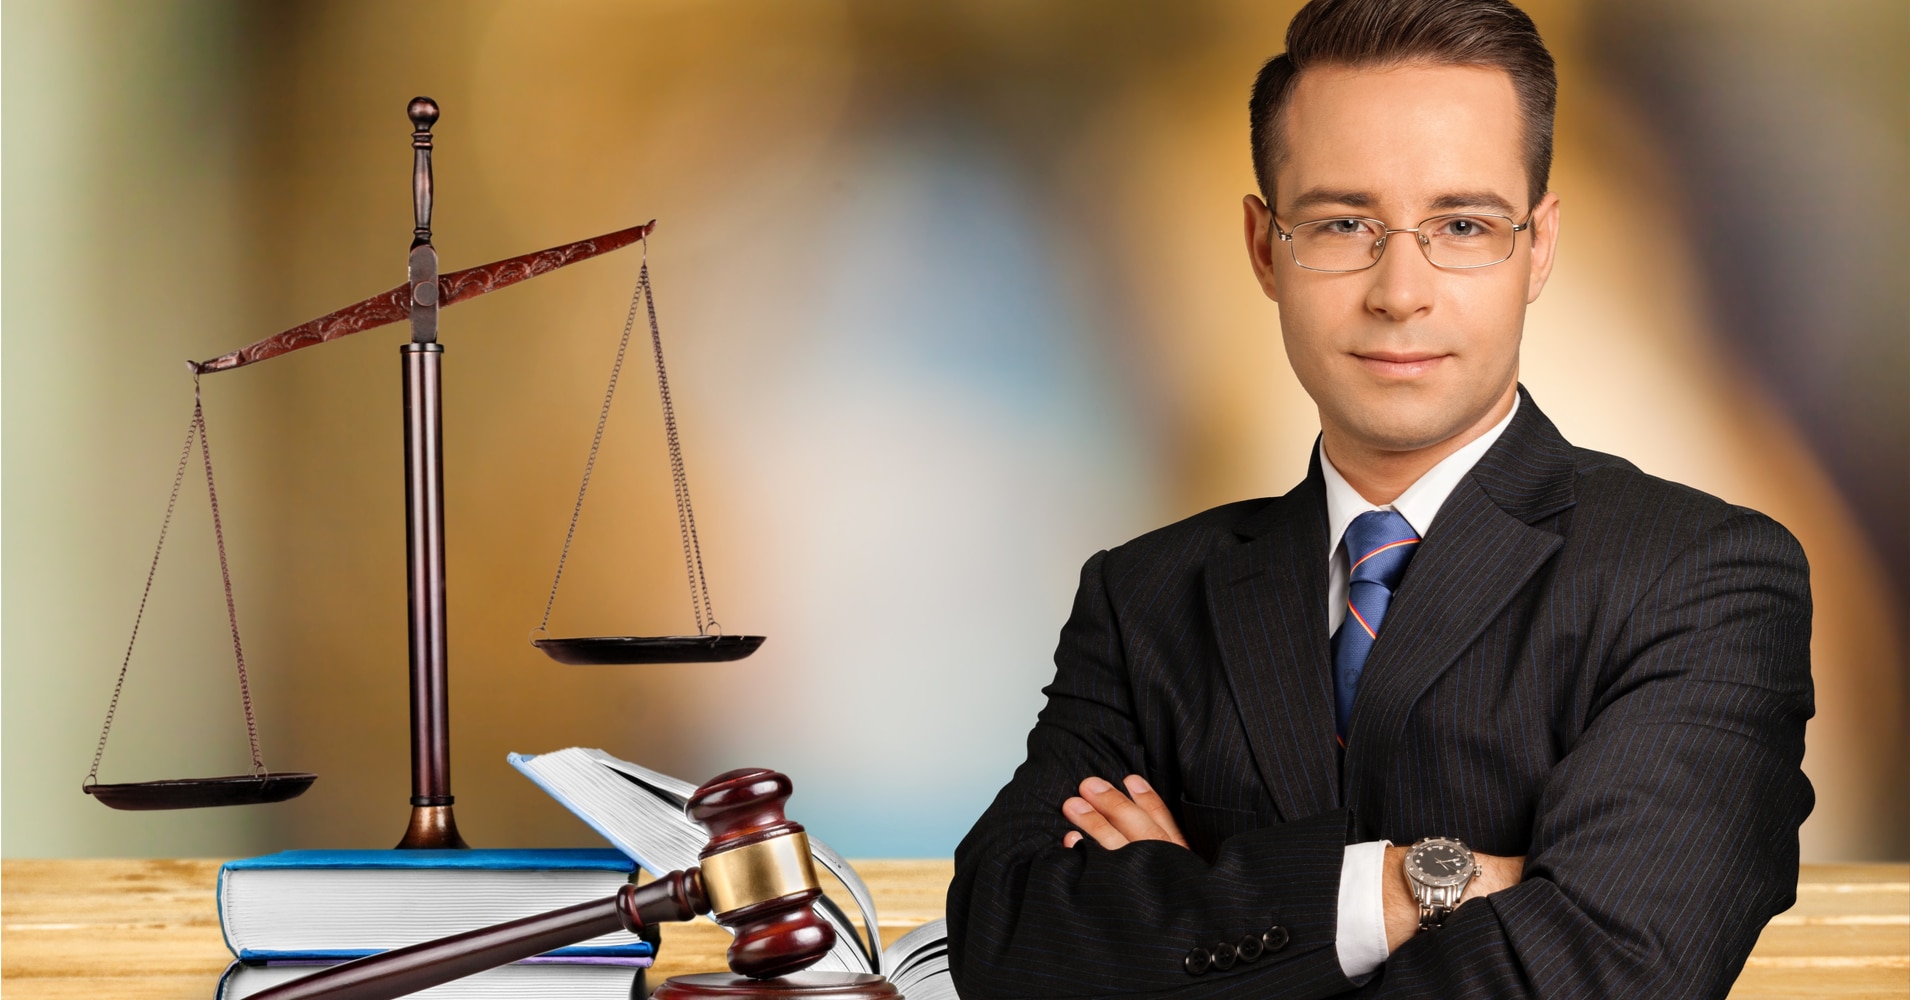 Lawyer Jobs